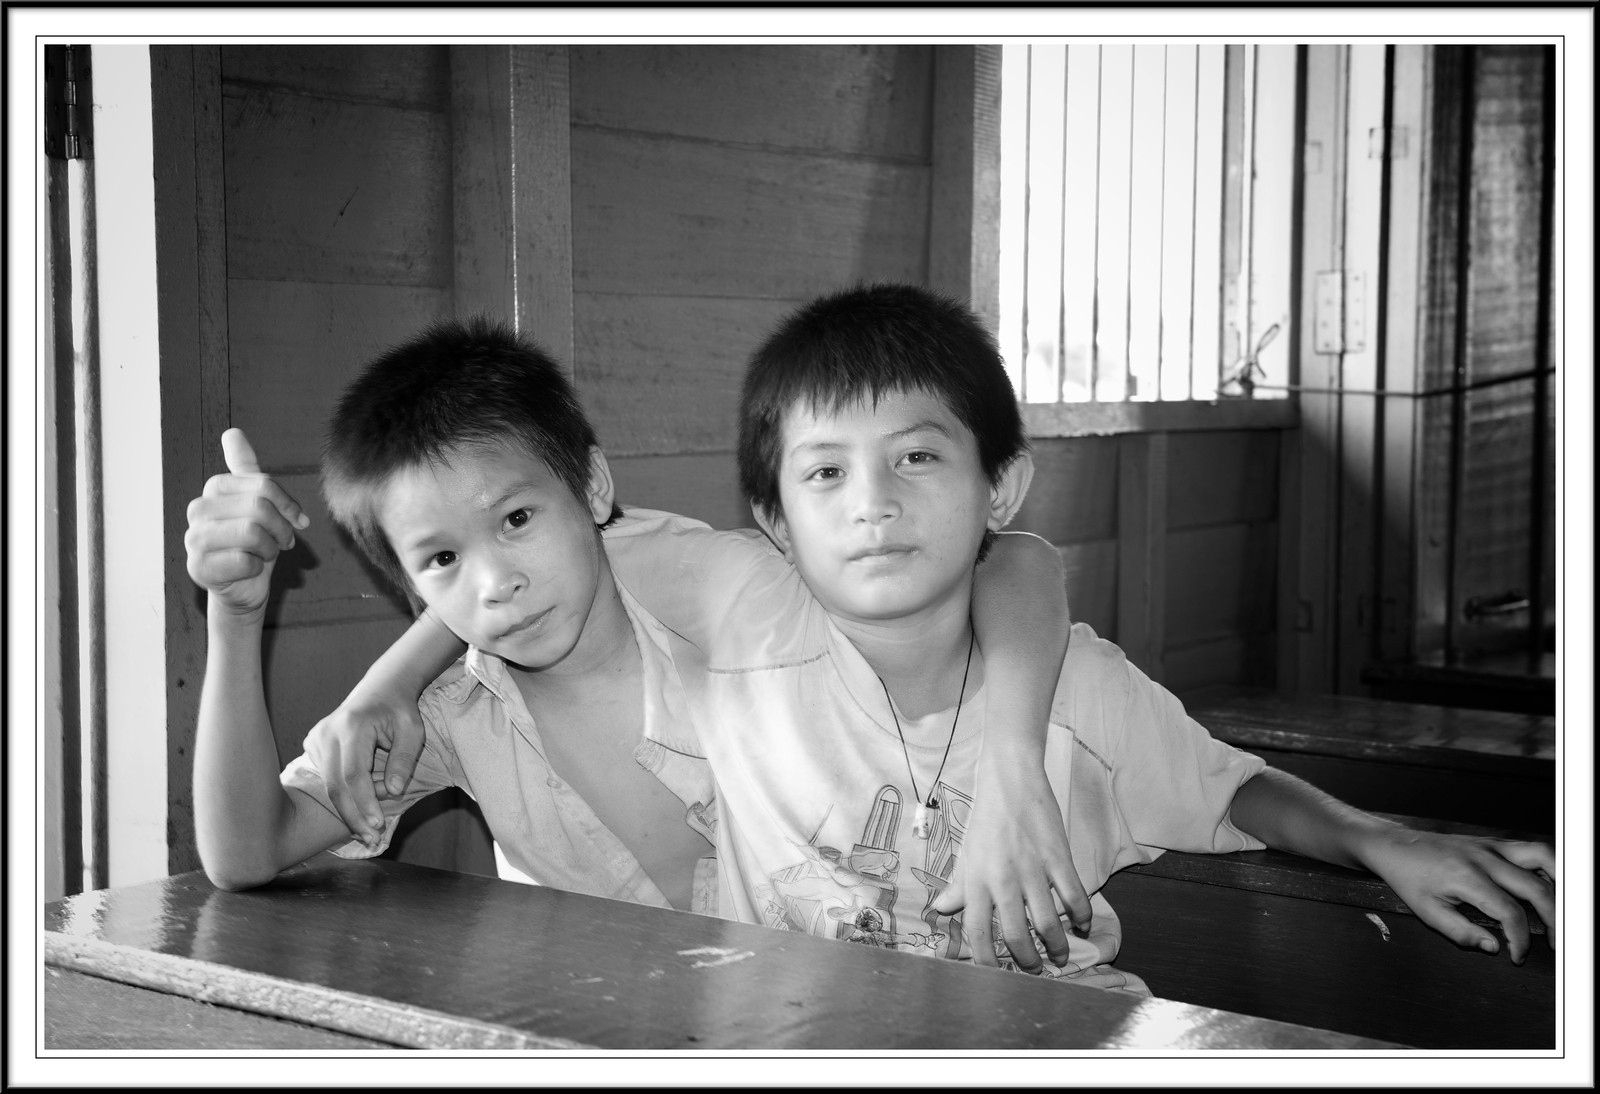      

 
  School boys in Tonlé Sap Lake Cambodia
 






















     